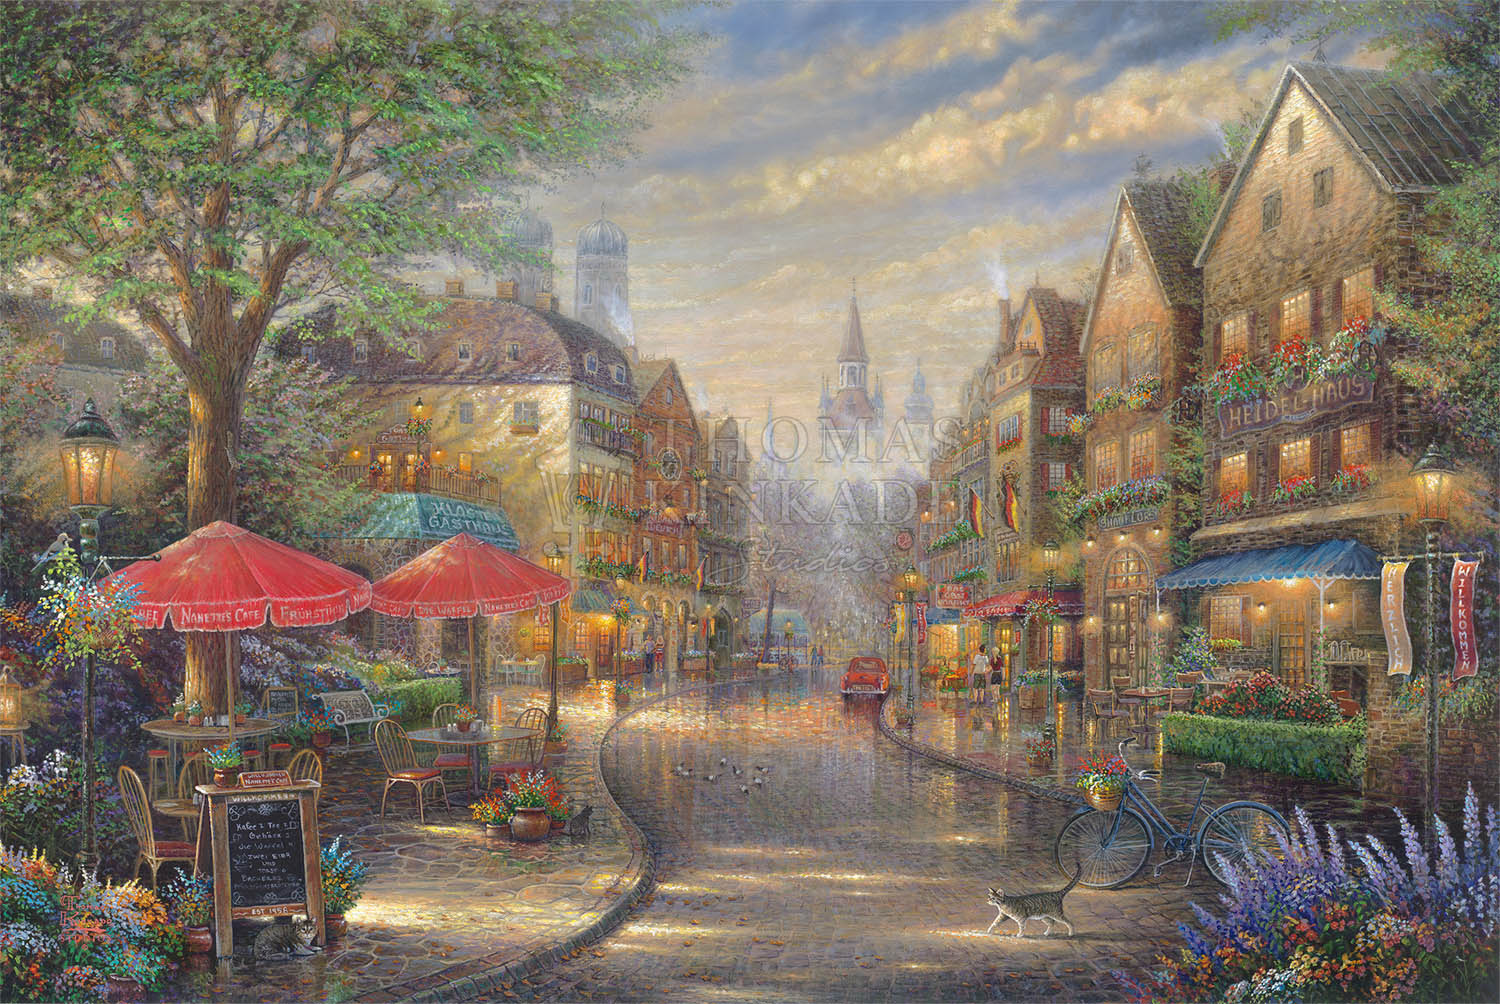 Disney/Pixar Brave - Limited Edition Canvas By Thomas Kinkade Studios –  Disney Art On Main Street